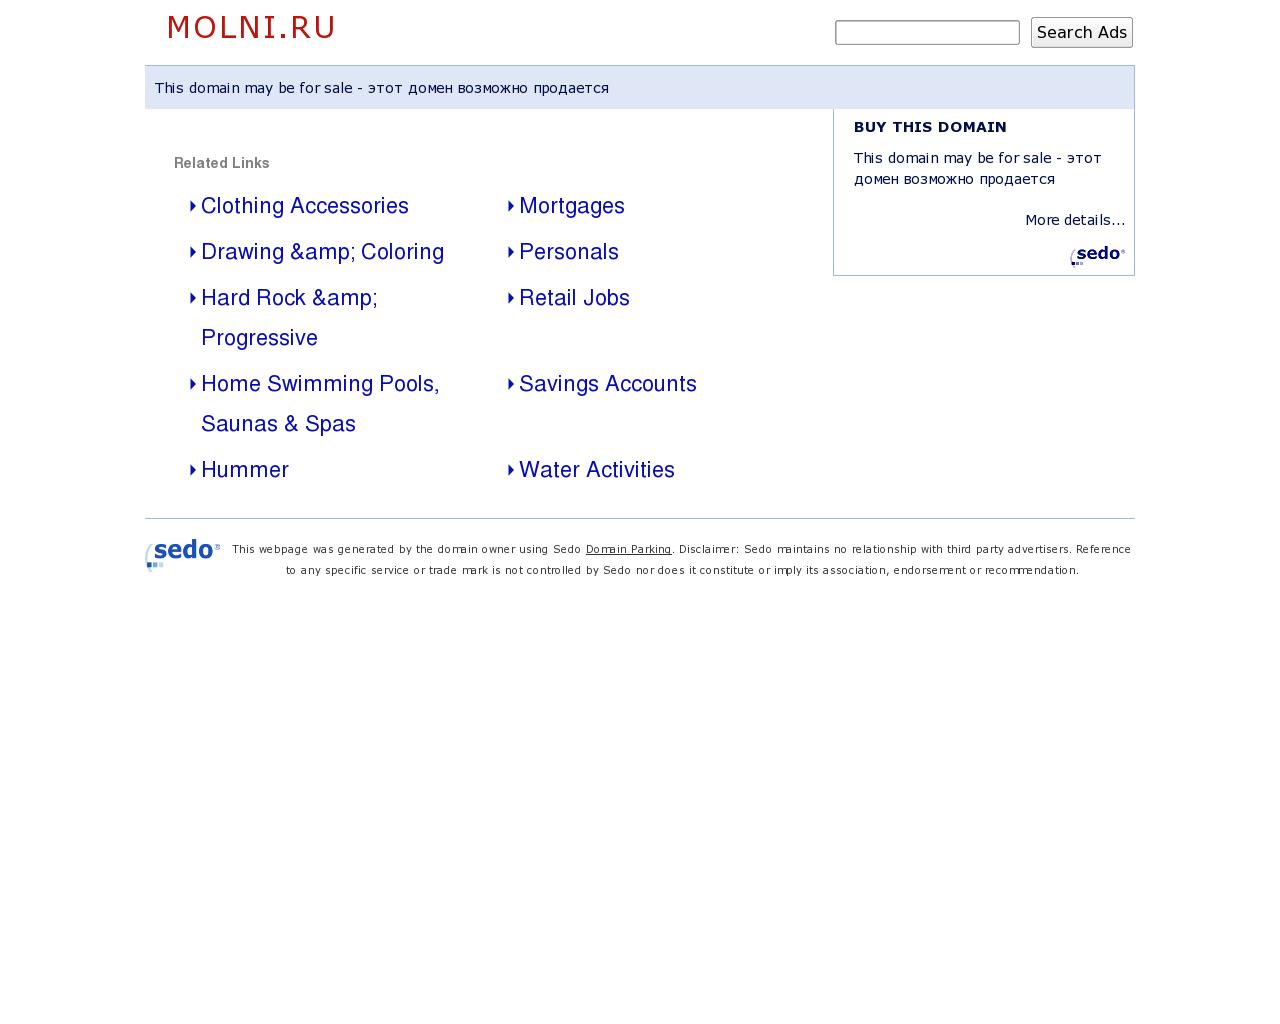 Изображение сайта molni.ru в разрешении 1280x1024